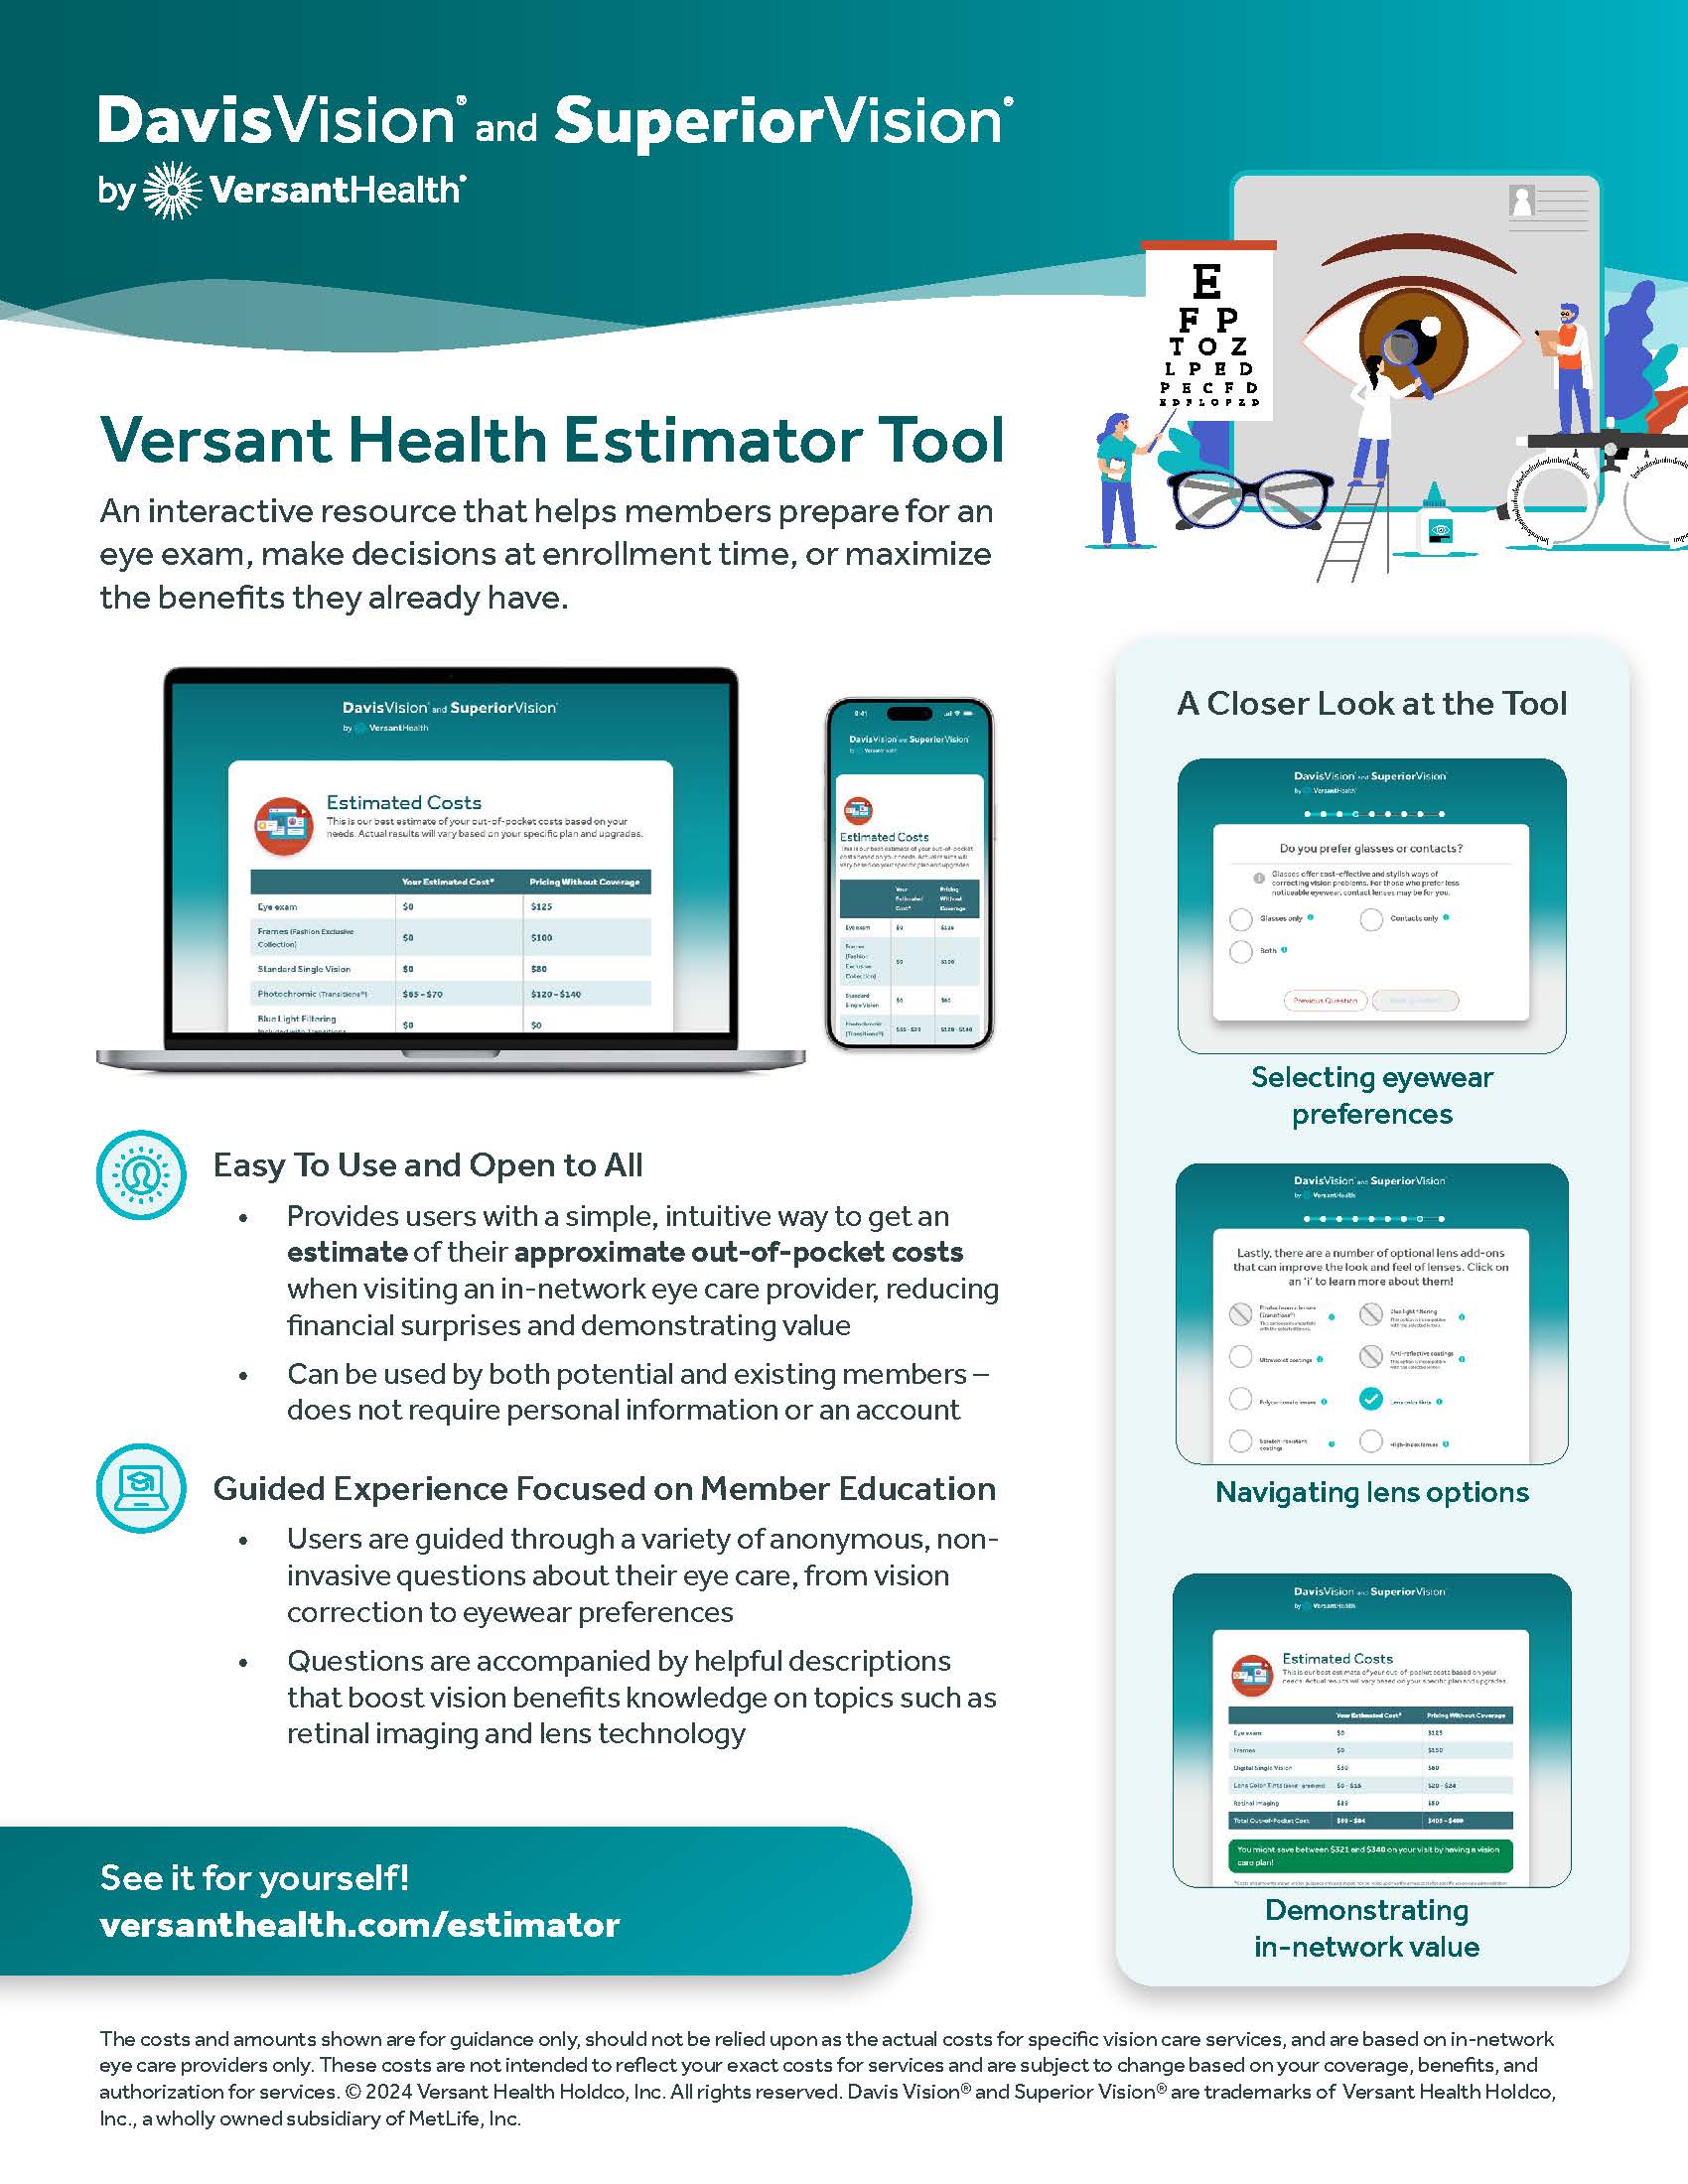 Superior Vision Care Cost Estimator Tool flyer